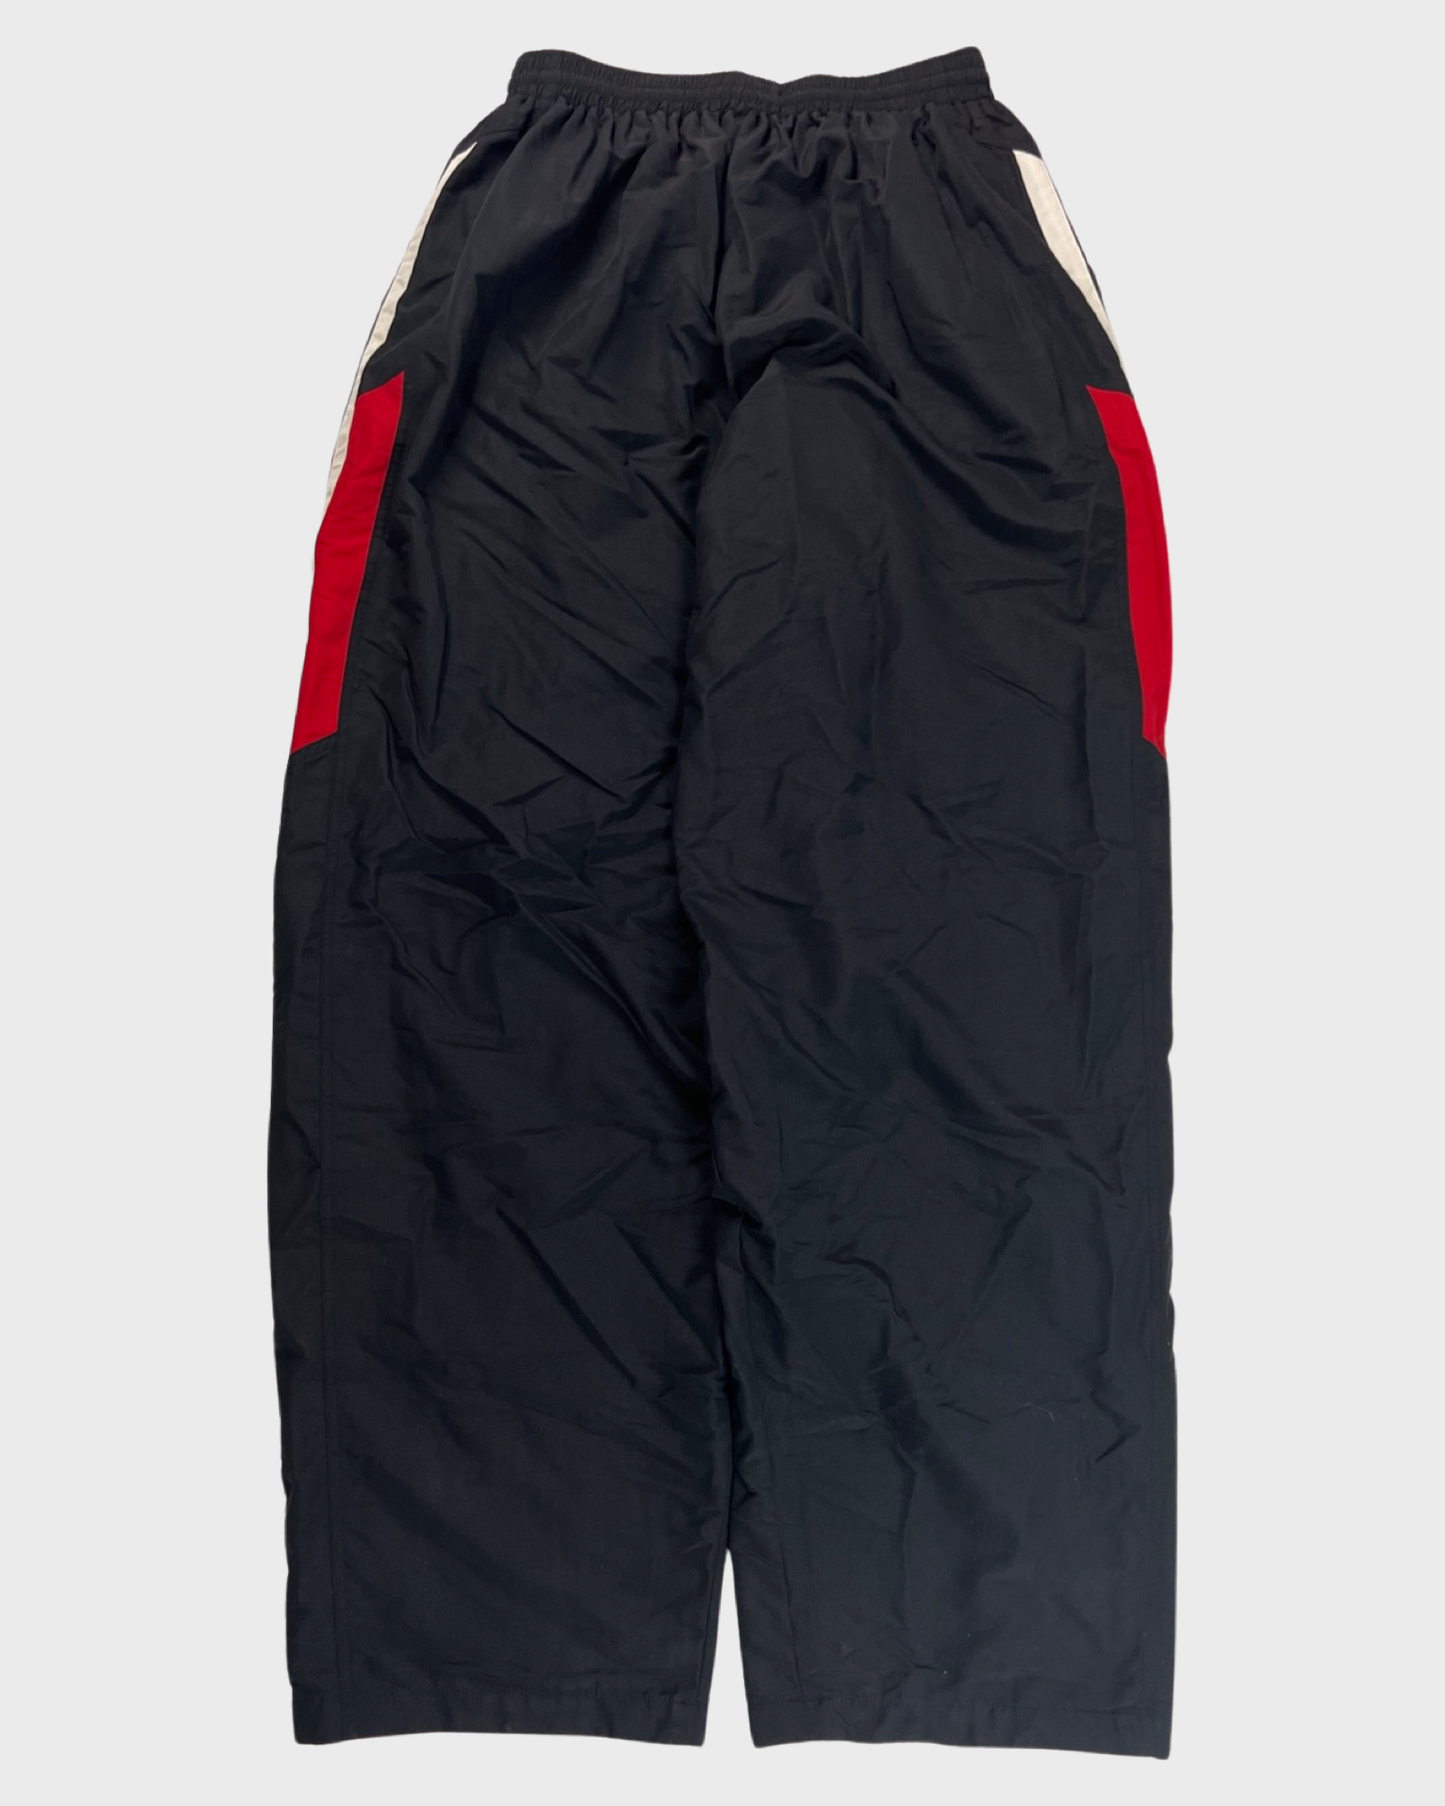 Balenciaga Sporty B trackpants black red SZ:44